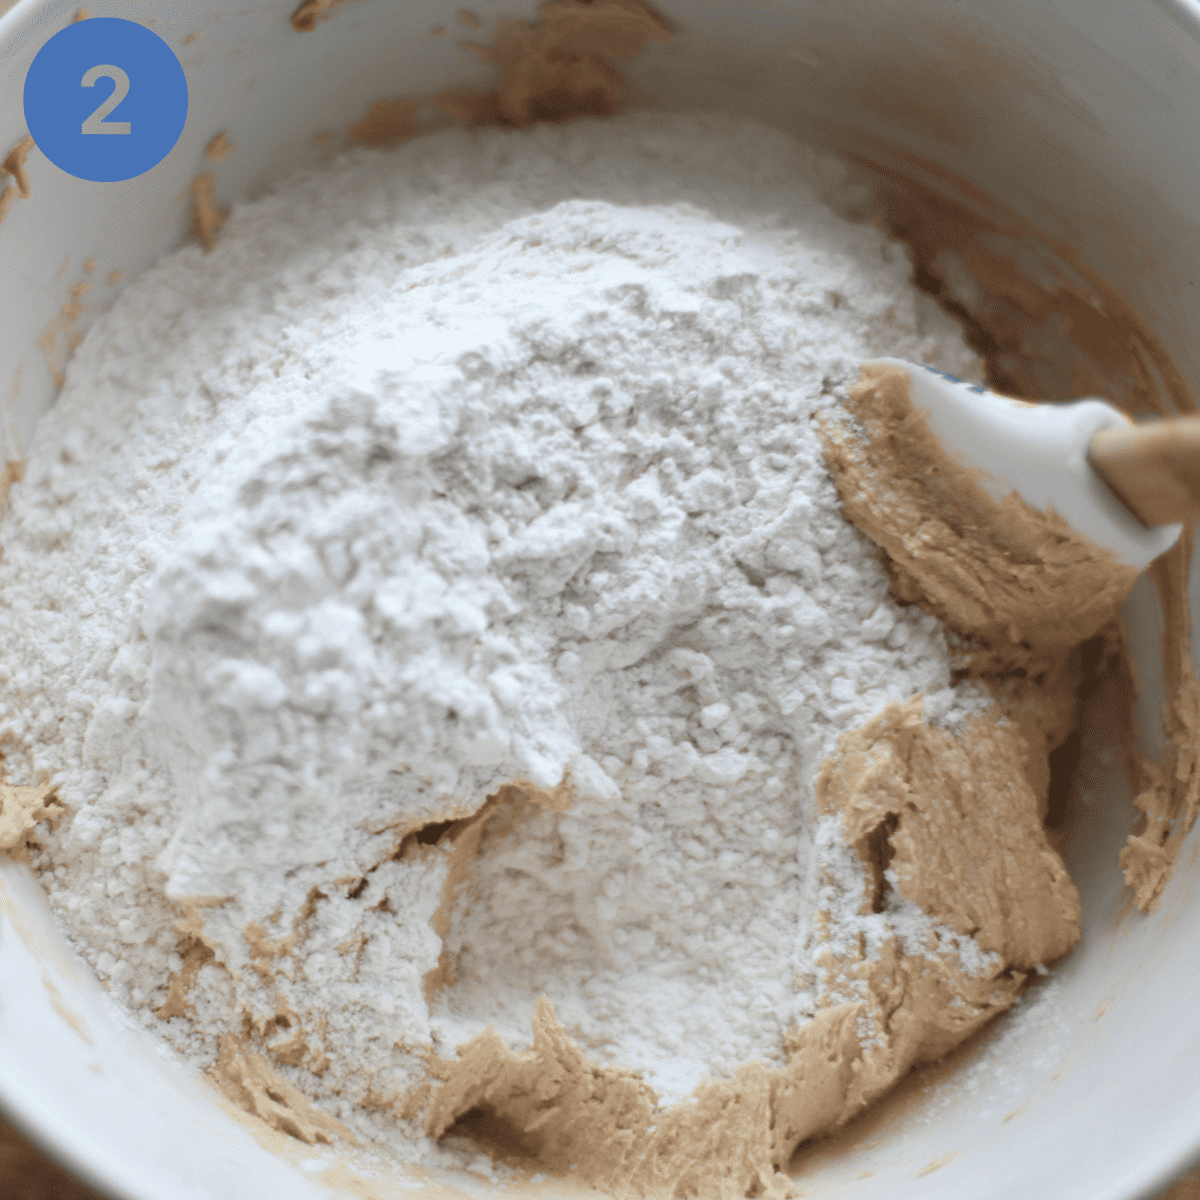 Folding flour into peanut butter/sugar mixture.